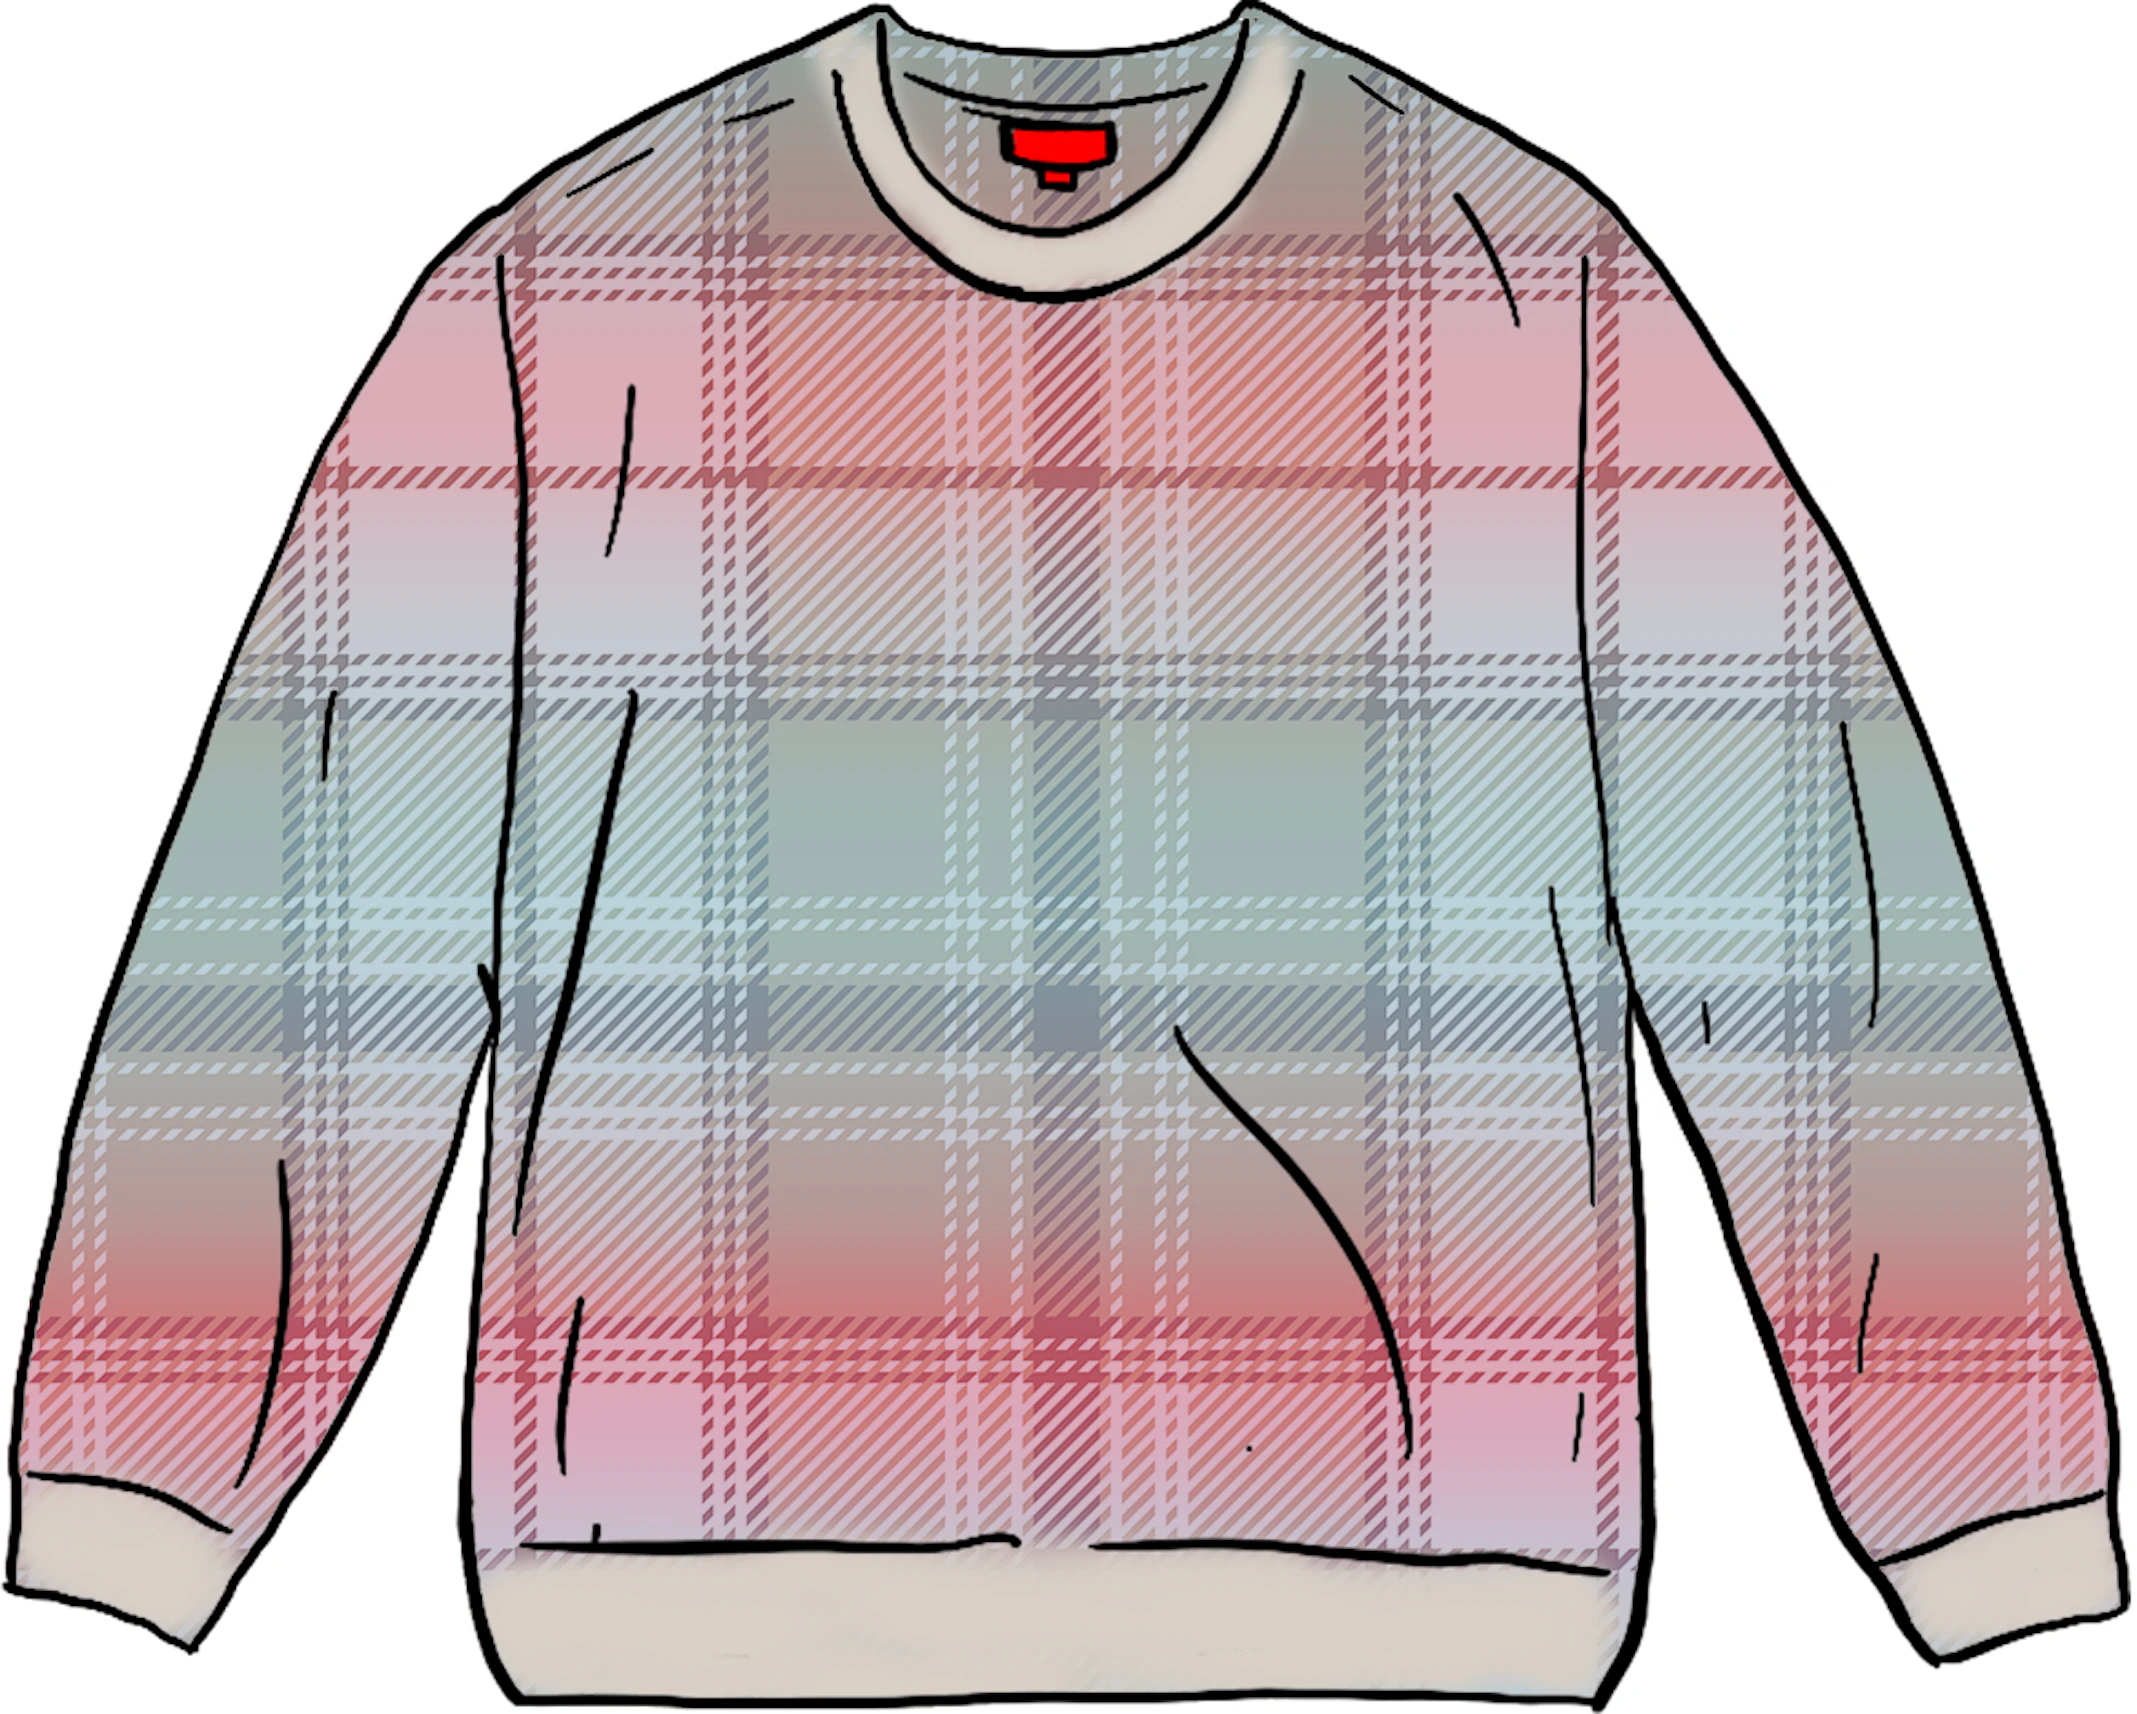 supreme Brushed Plaid Sweater Lサイズ